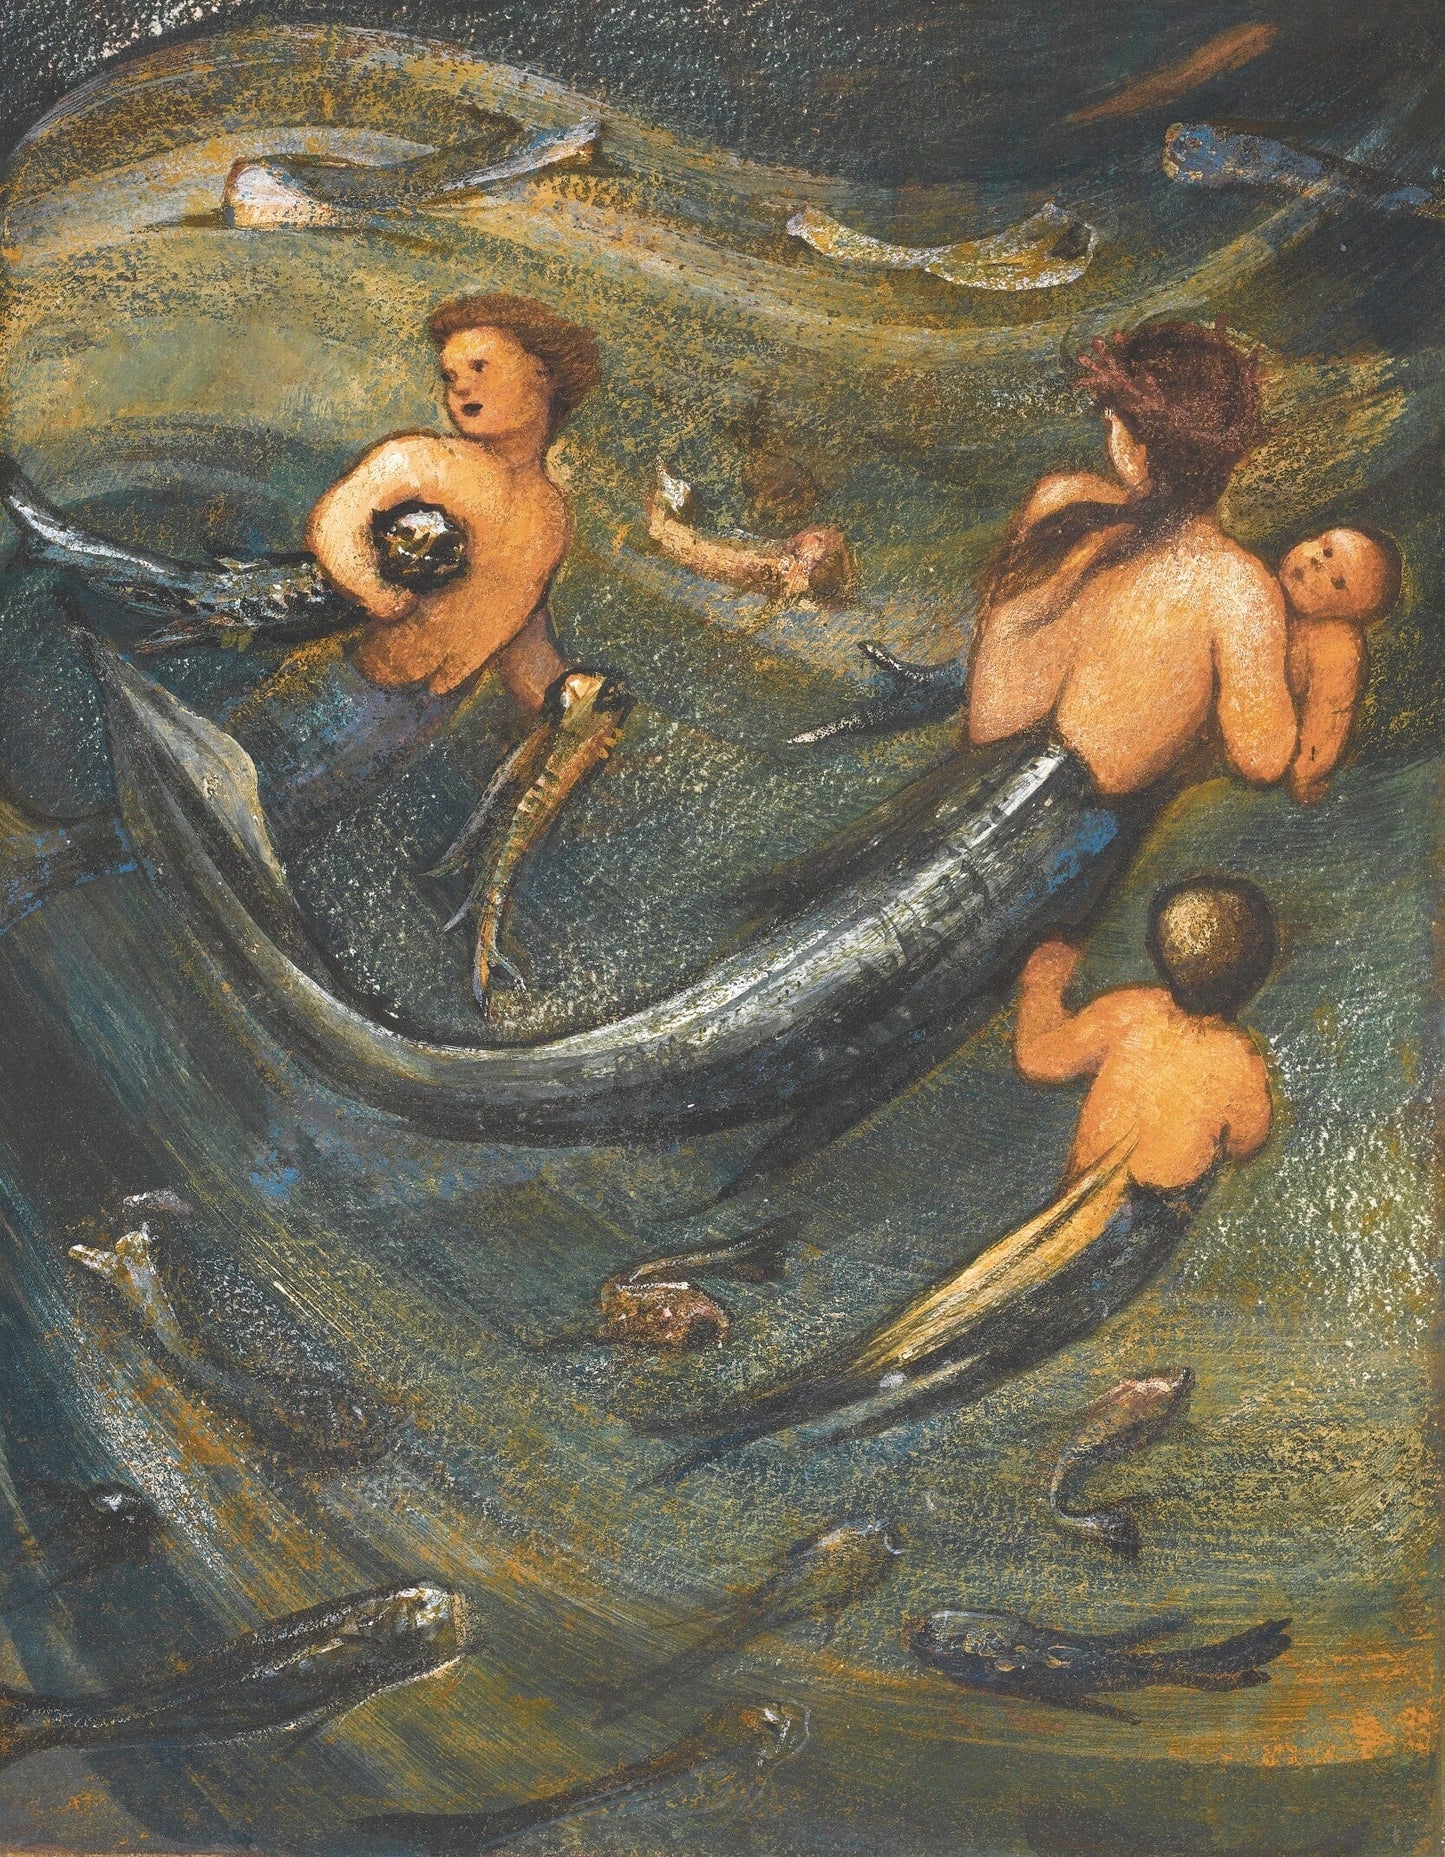 The Mermaid Family (1800s) | Sir Edward Burne-Jones prints Posters, Prints, & Visual Artwork The Trumpet Shop   